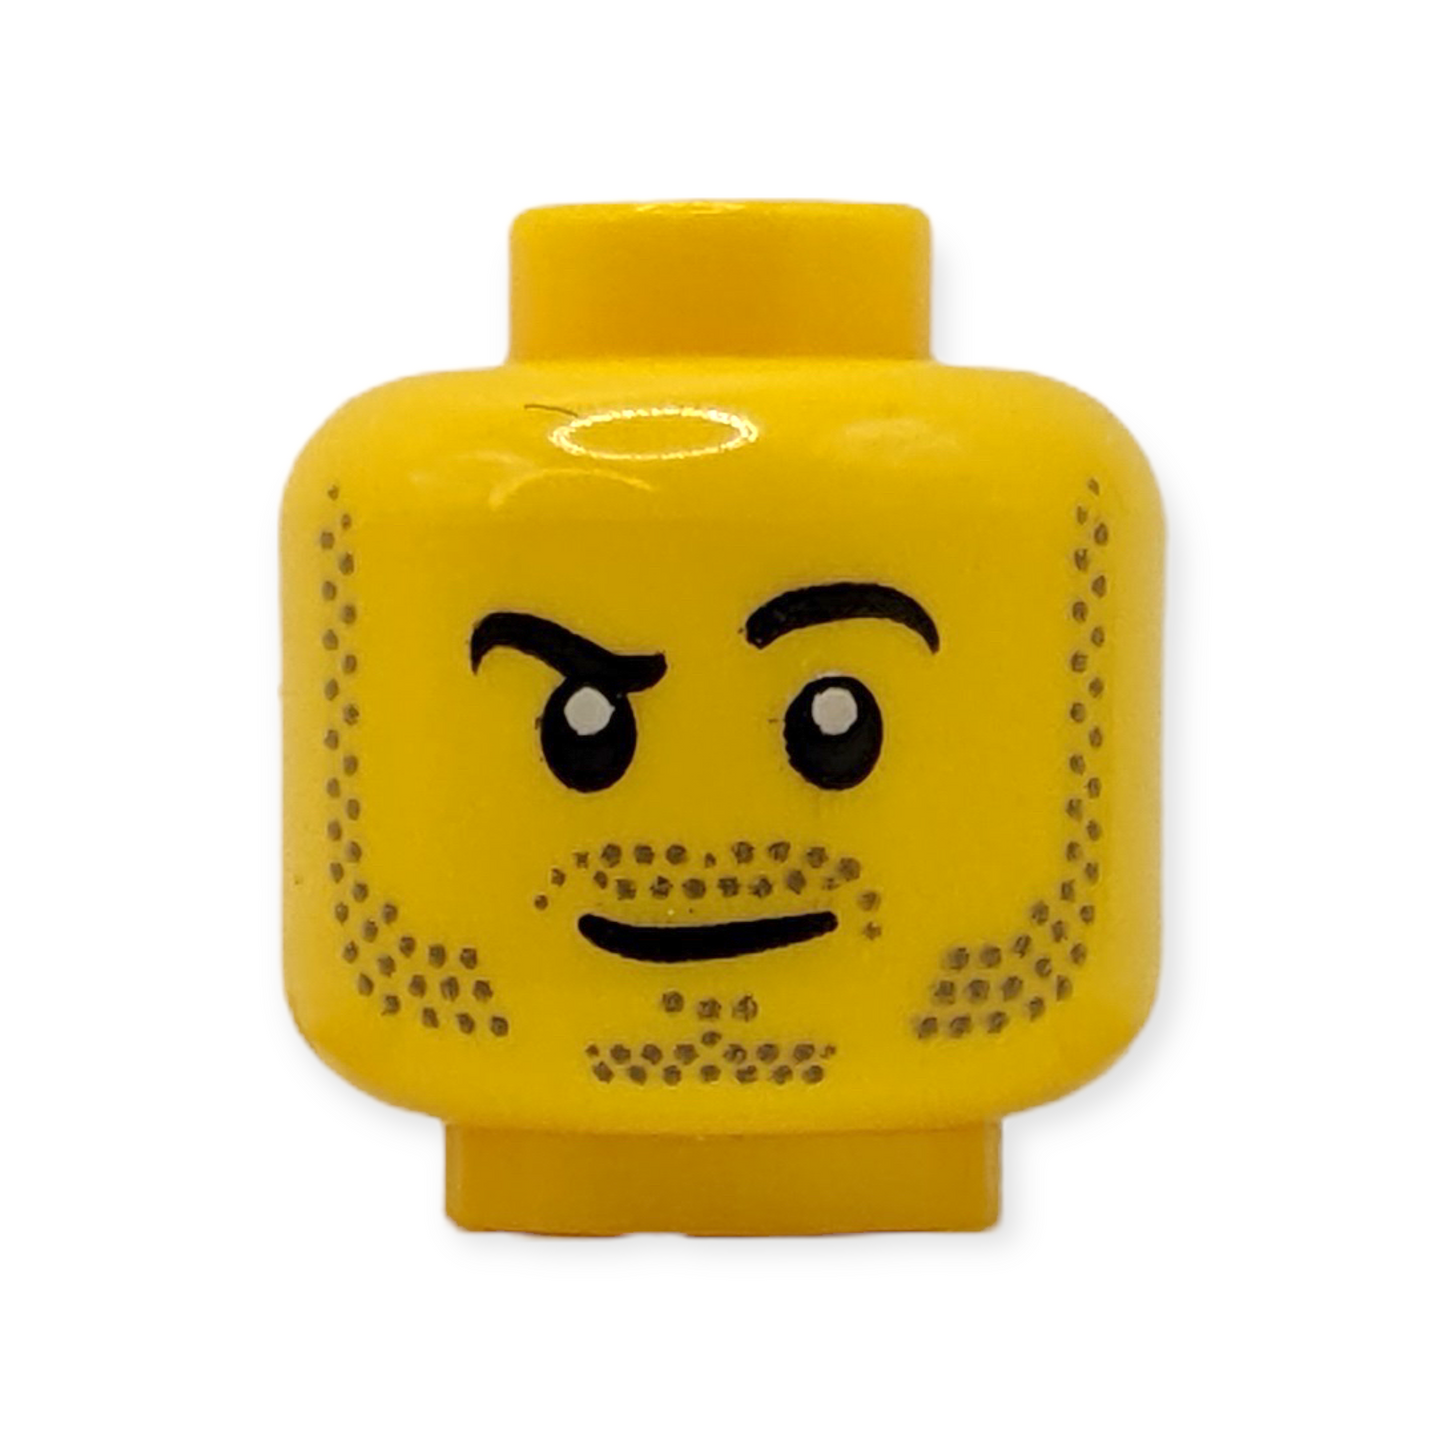 LEGO Head - 2524 Beard Stubble Raised Right Eyebrow